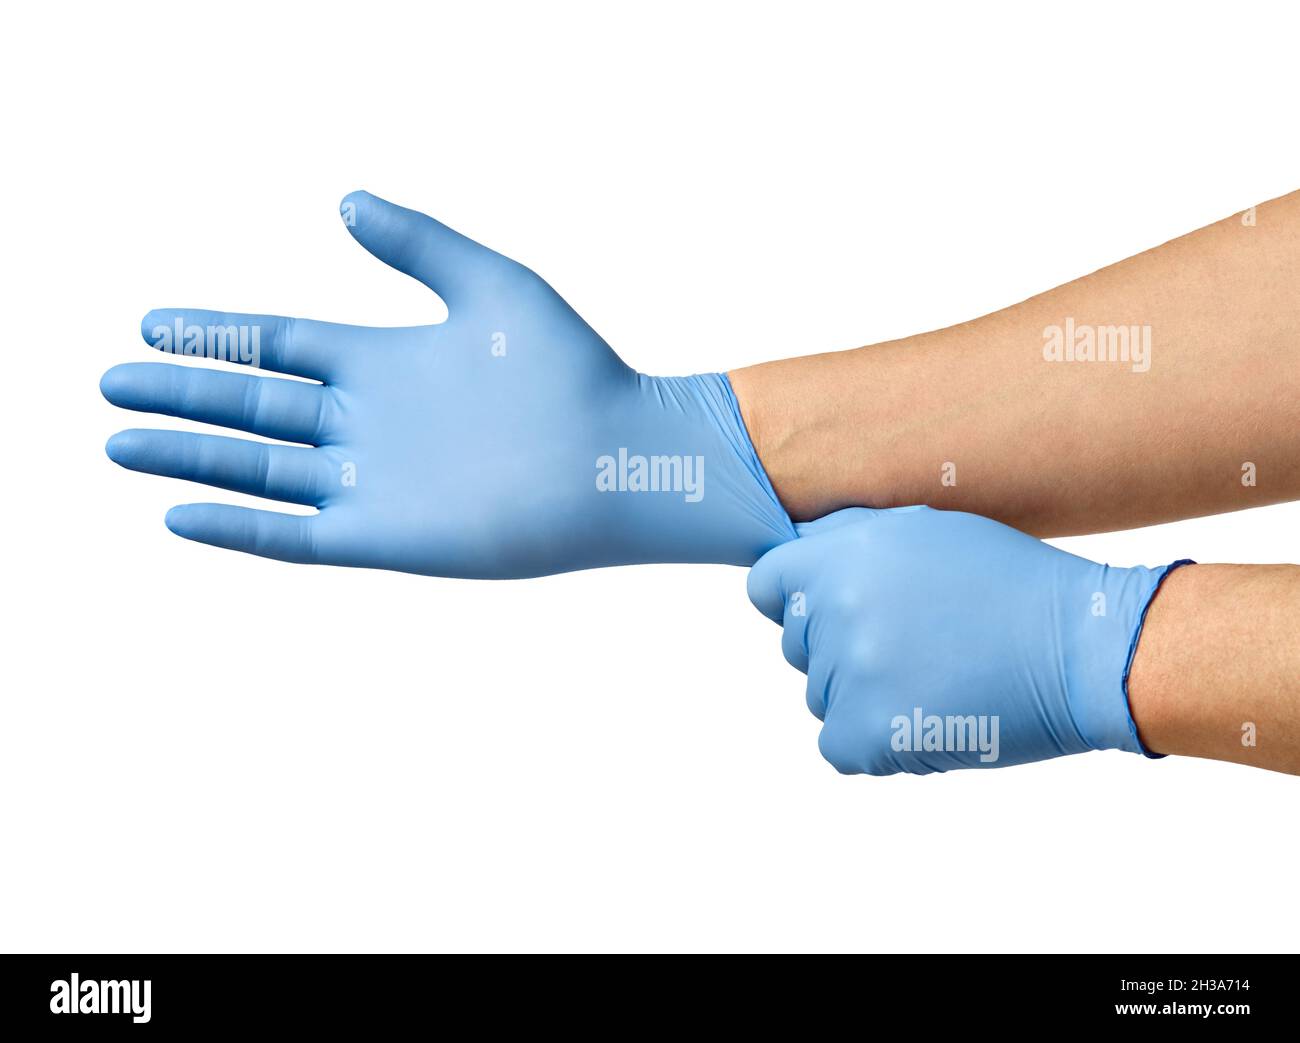 latex glove protective protection virus corona coronavirus disease epidemic medical health hygiene hand Stock Photo